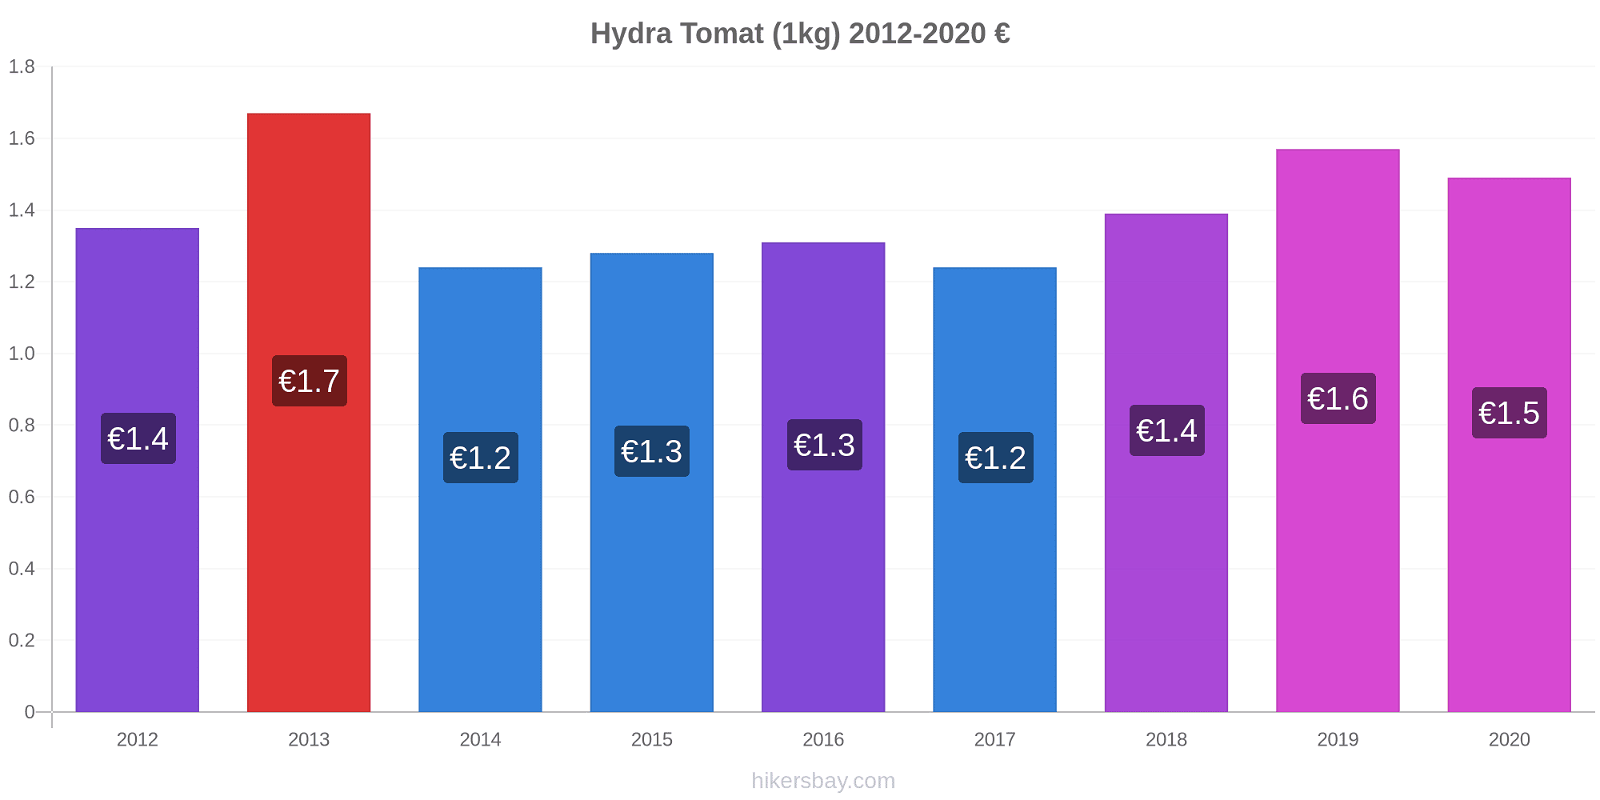 Hydra perubahan harga Tomat (1kg) hikersbay.com